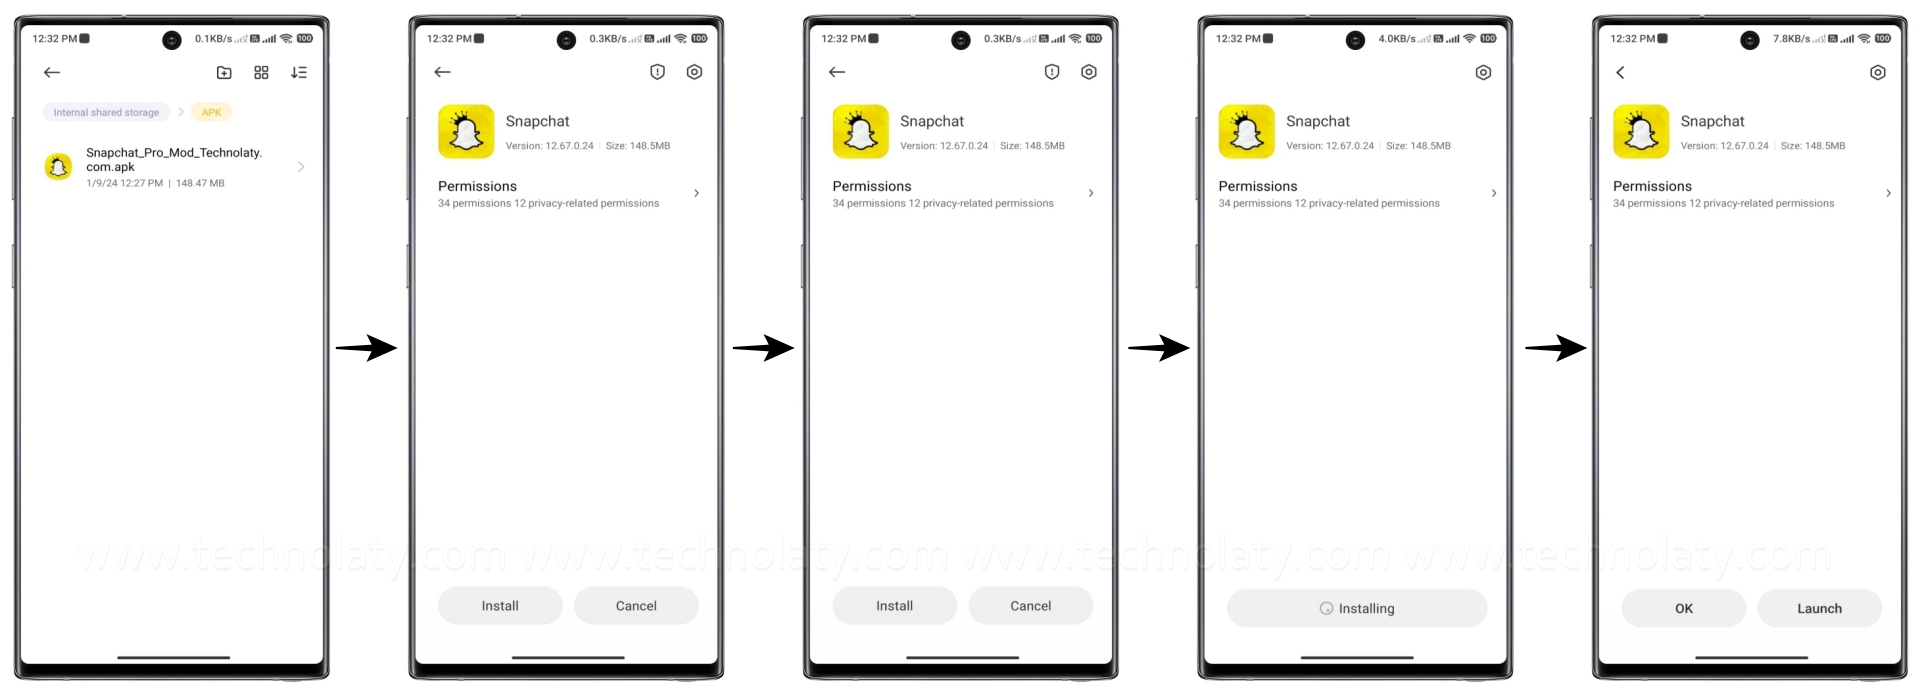 Snapchat Pro Mod